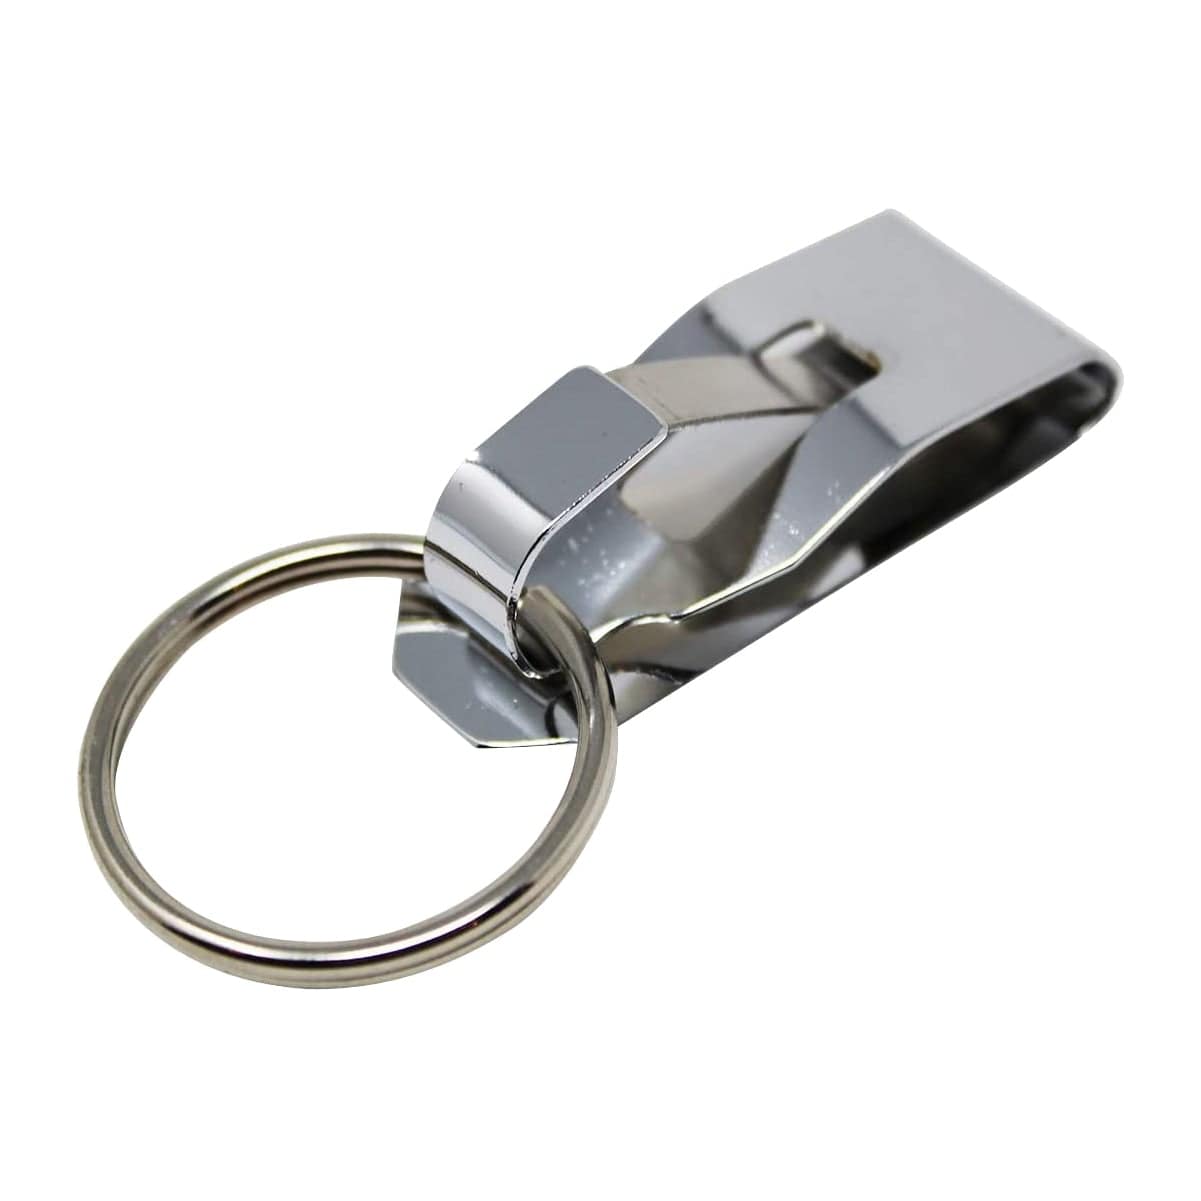 Shop for and Buy Nylon Belt Key Holder Double Hooks at